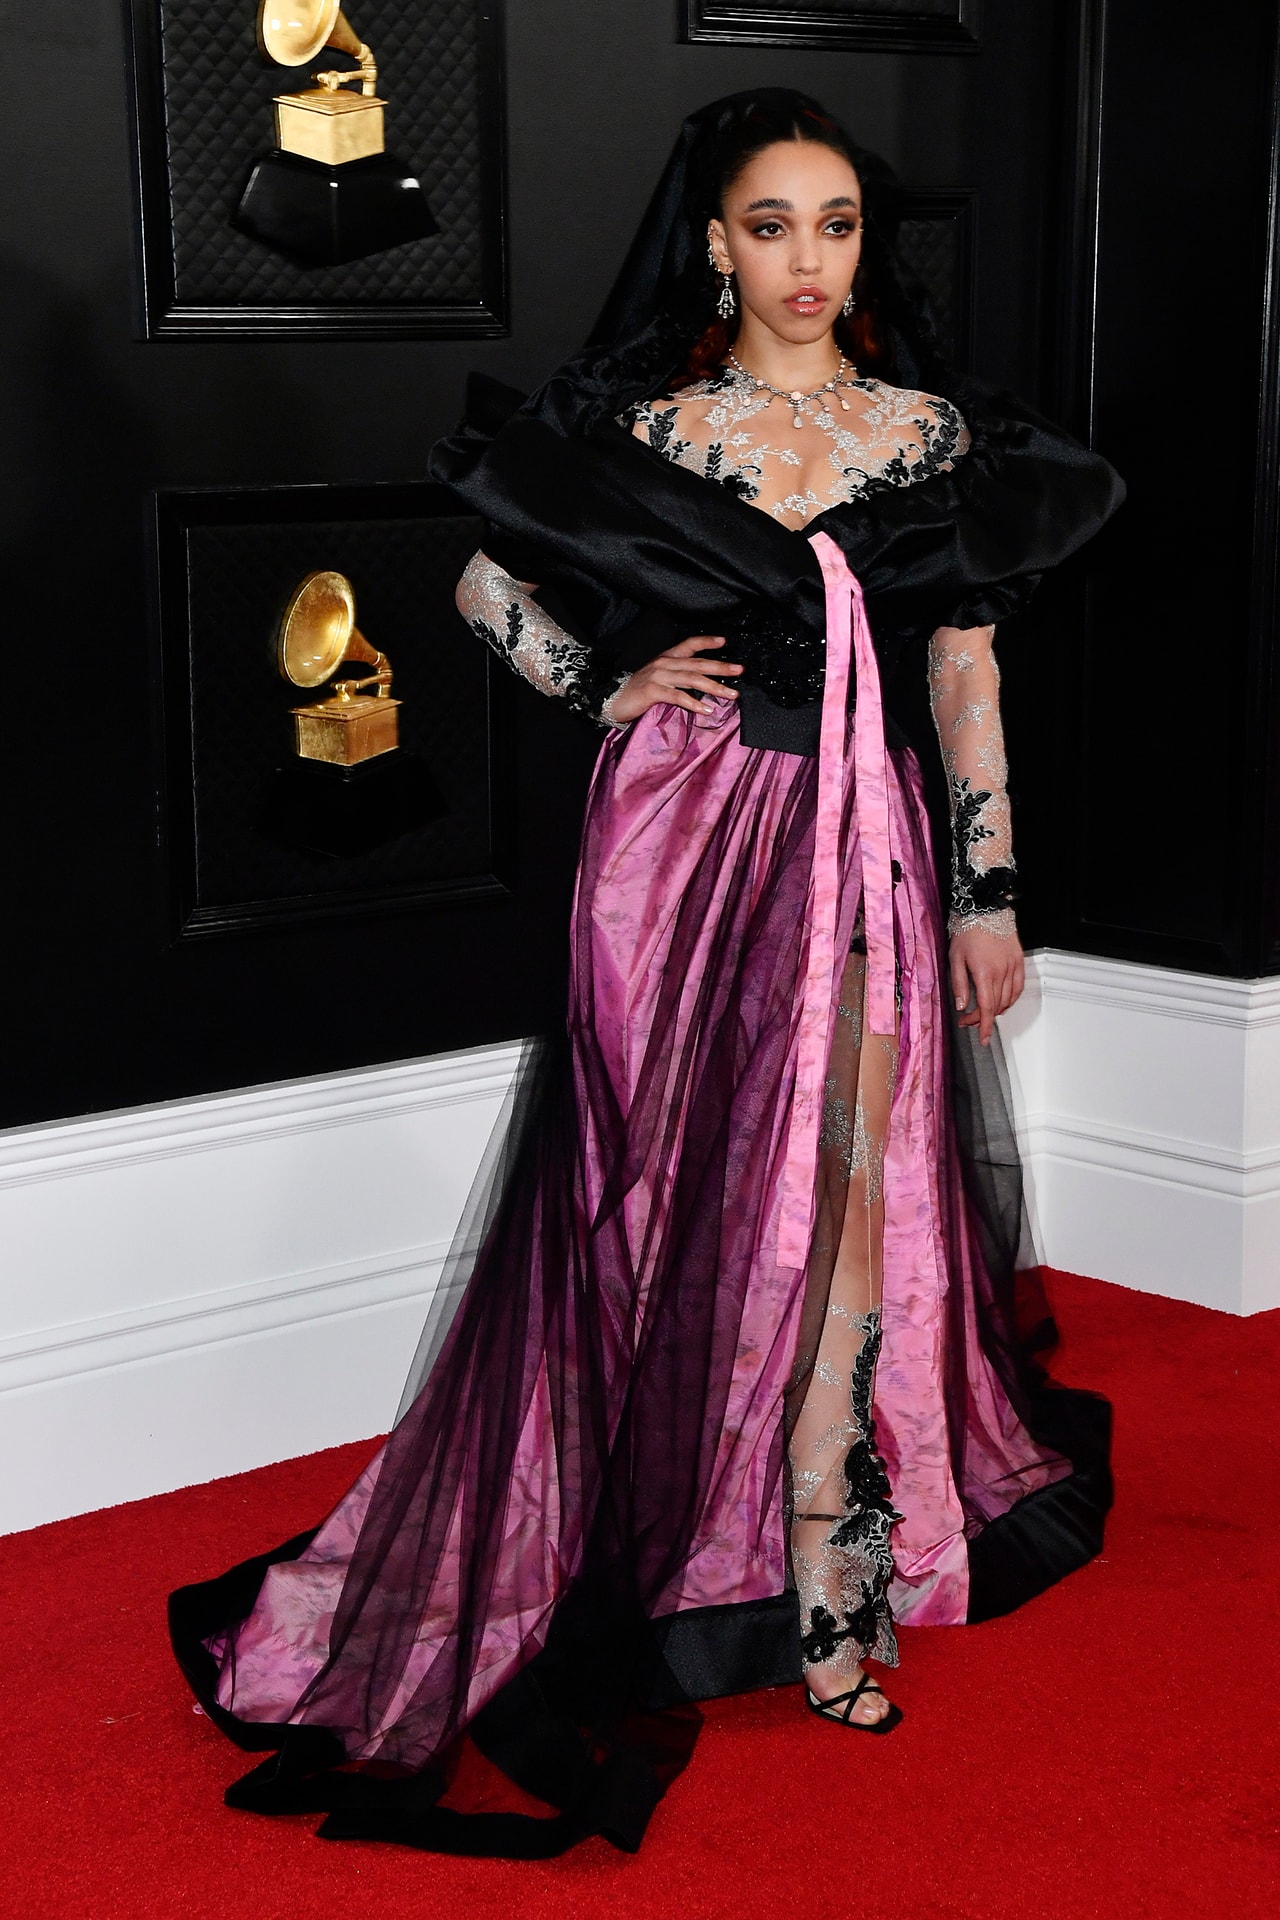 FKA Twigs 62nd Grammy Awards 2020 Red Carpet Dress